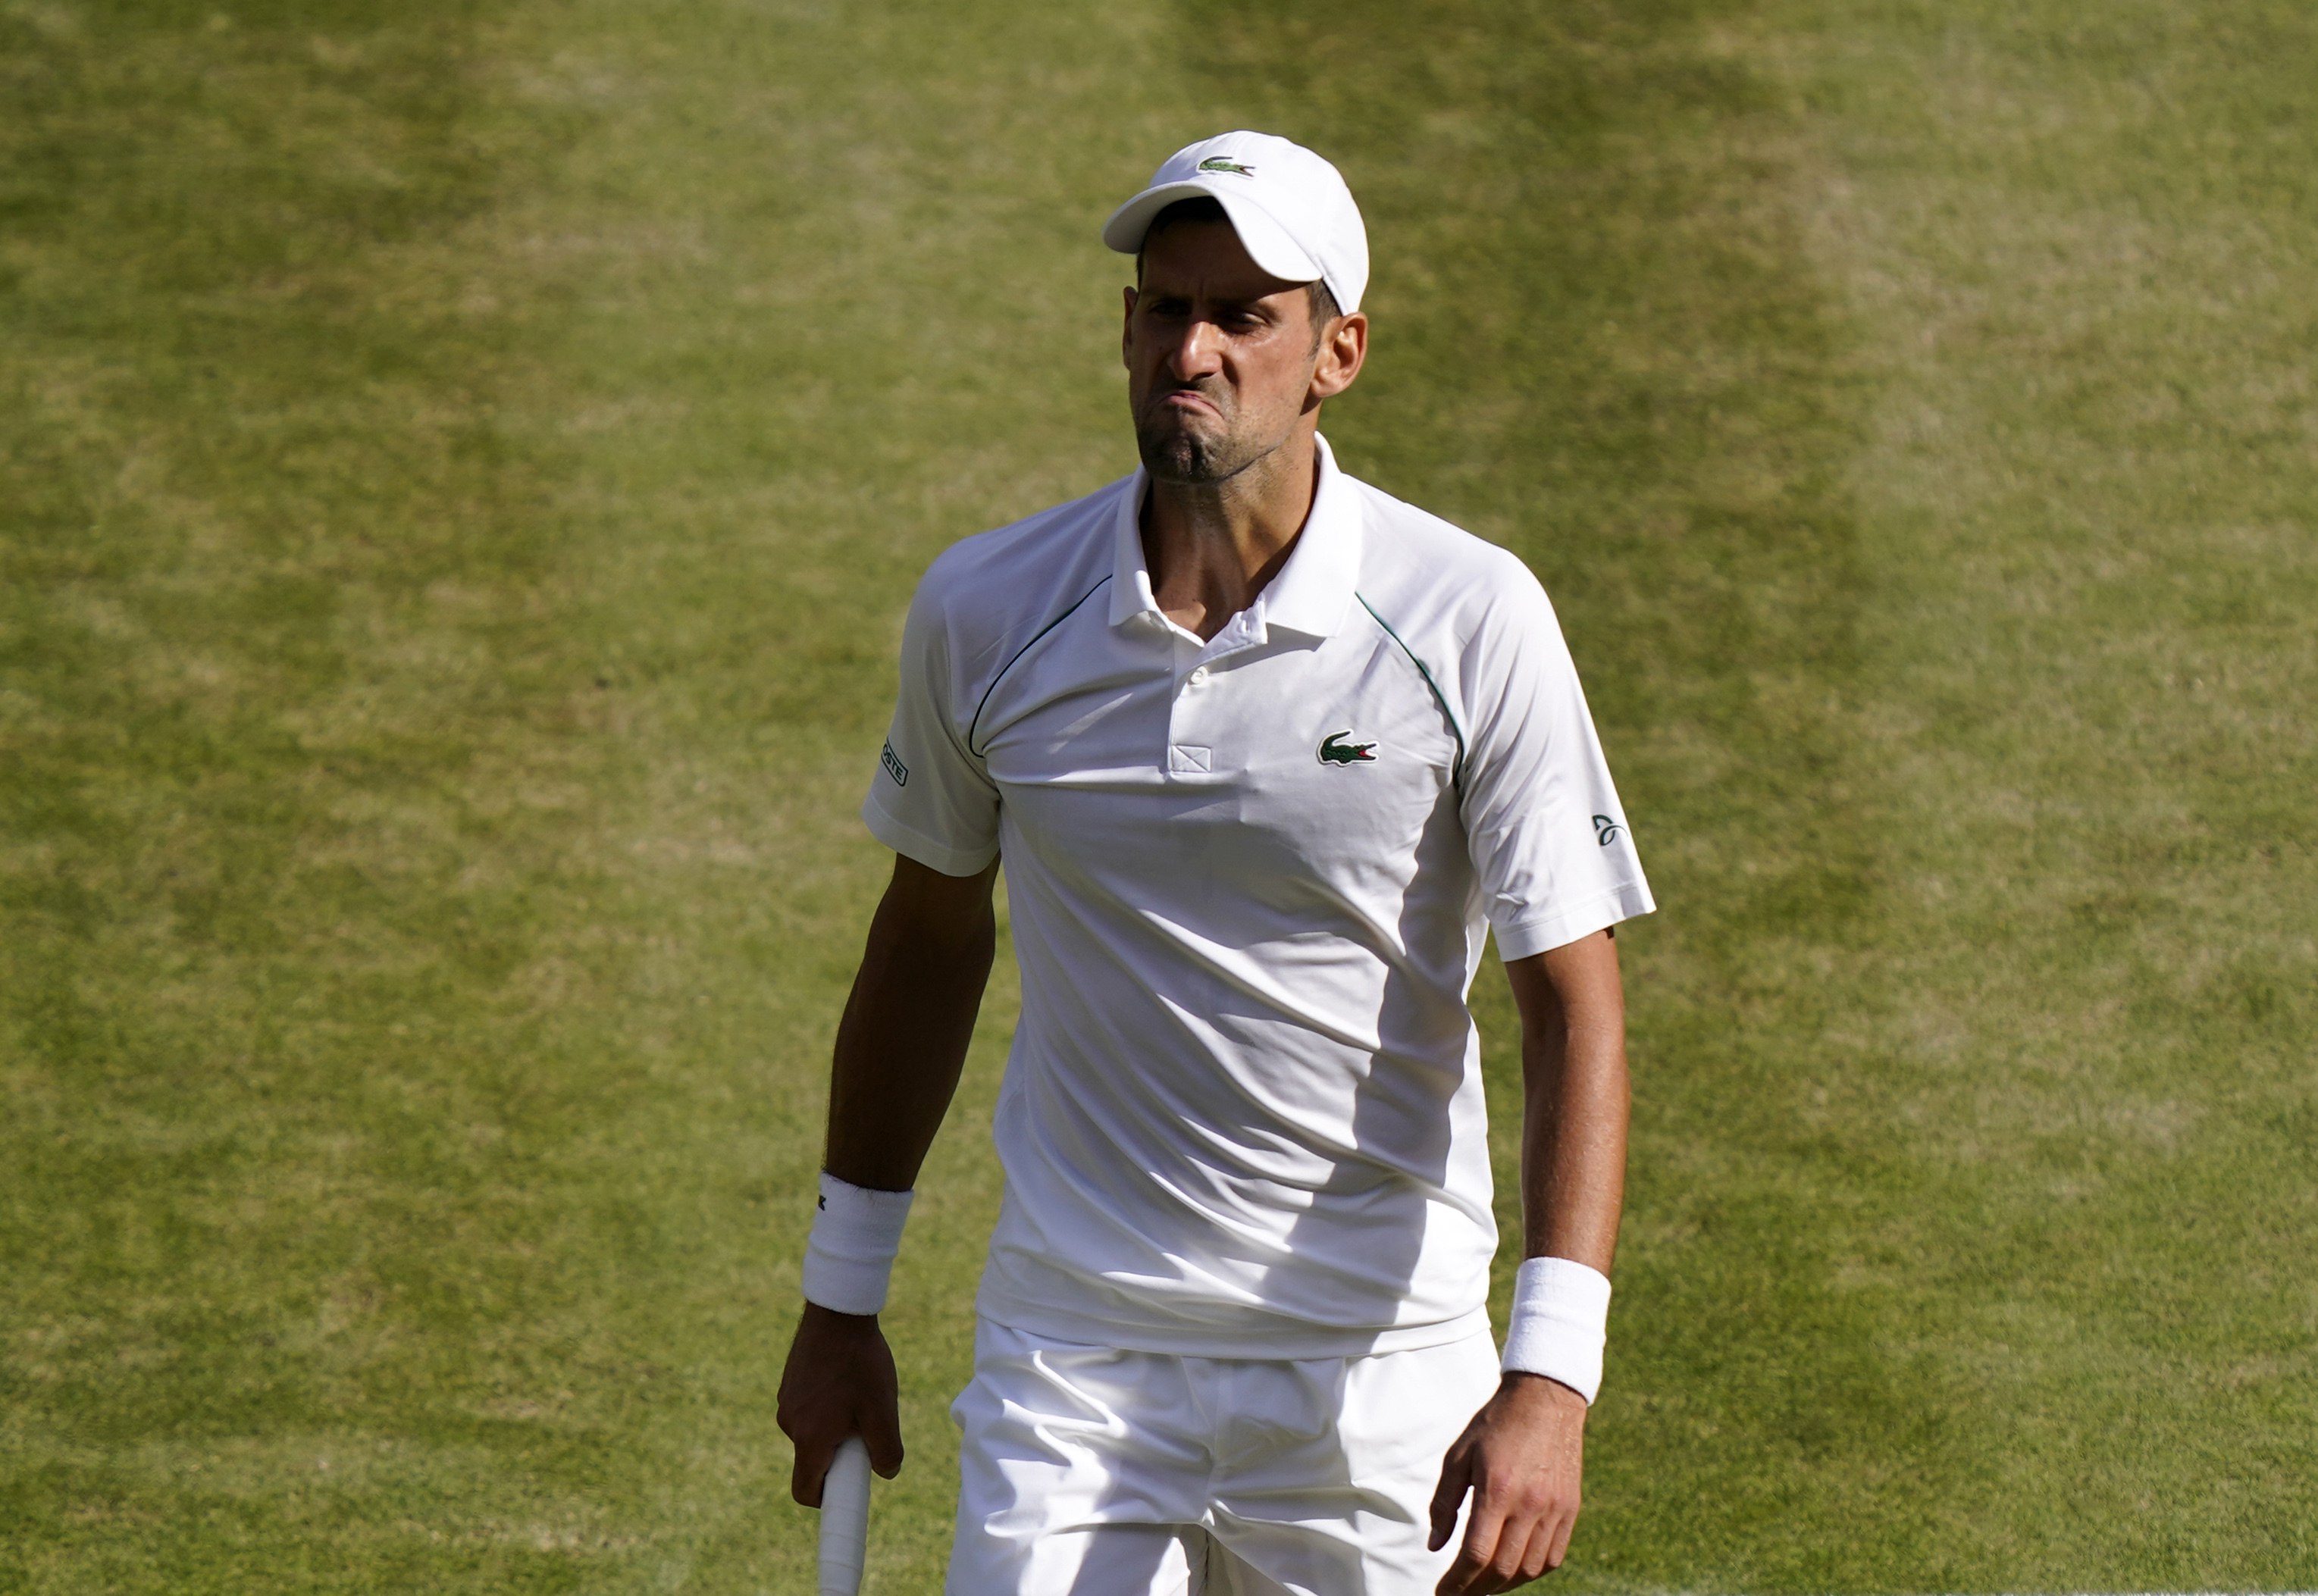 Djokovic beats Kyrgios to win 7th title  Wimbledon updates  Tennis.com